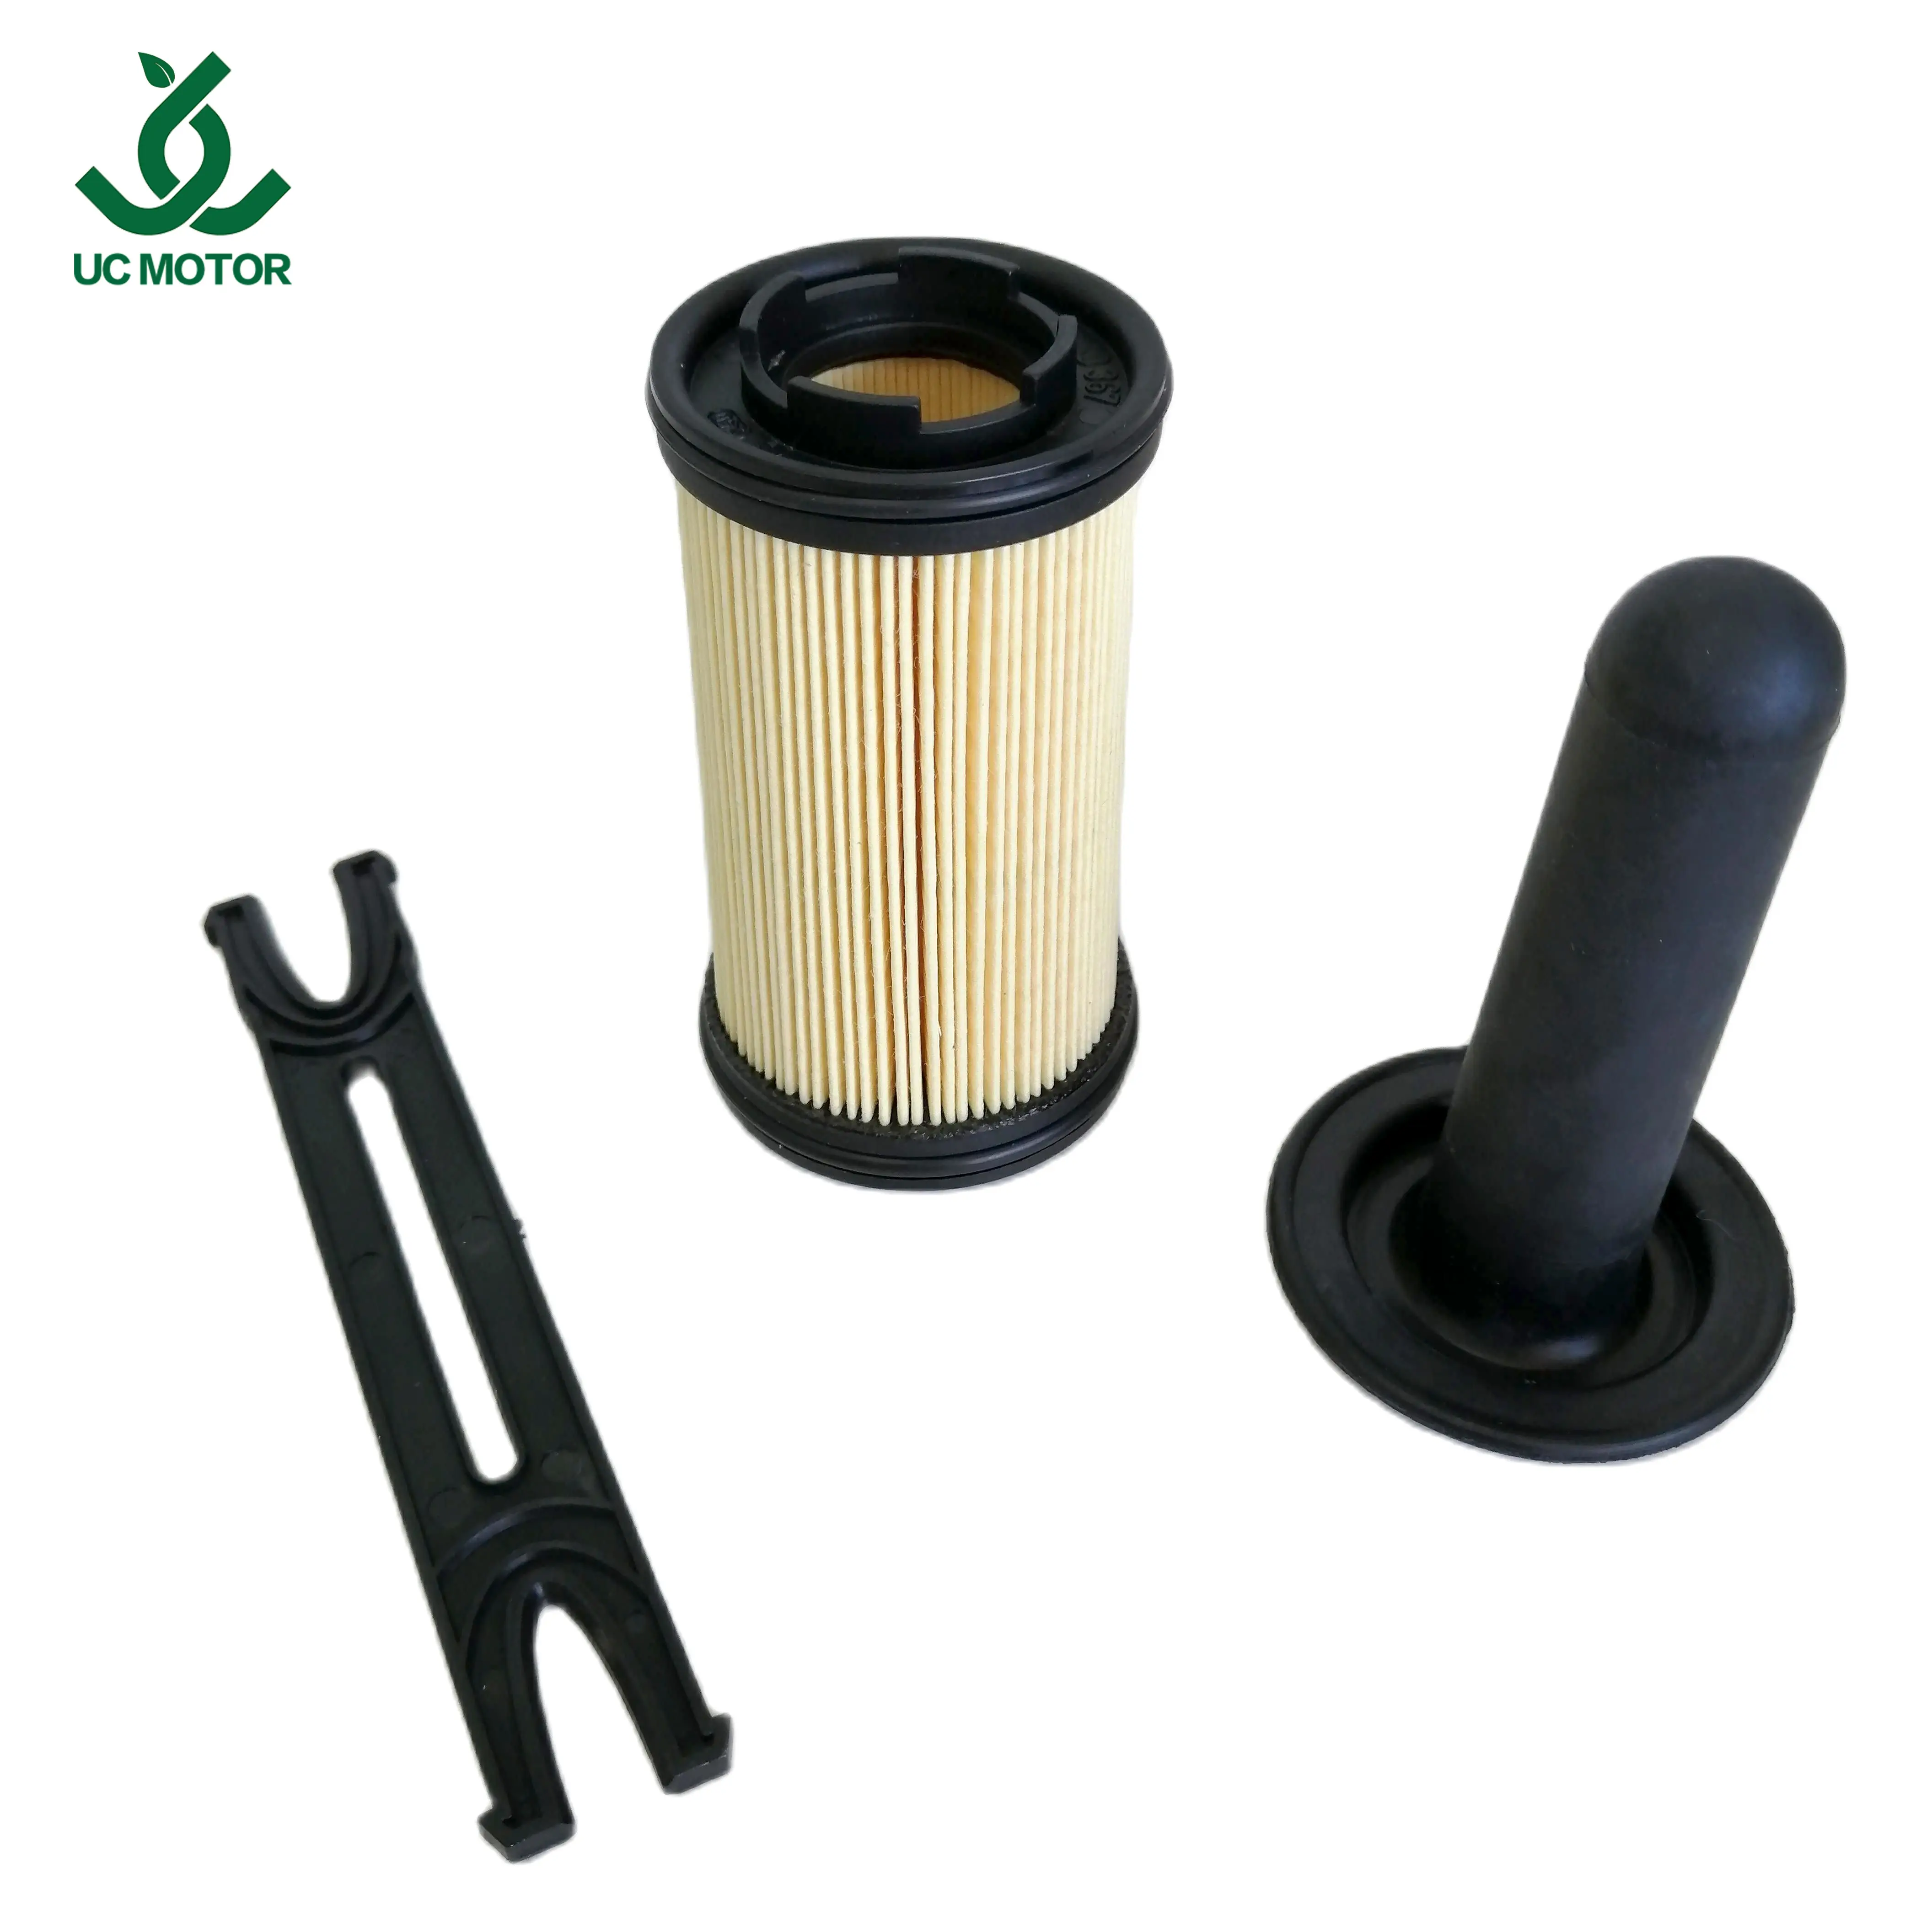 Adblue filtre SCR üre pompa aksesuarları OE #21496419/21673812/21376693/378-3187/21516229/UF101/145743603 Volvo için, Bosch DeNox2.